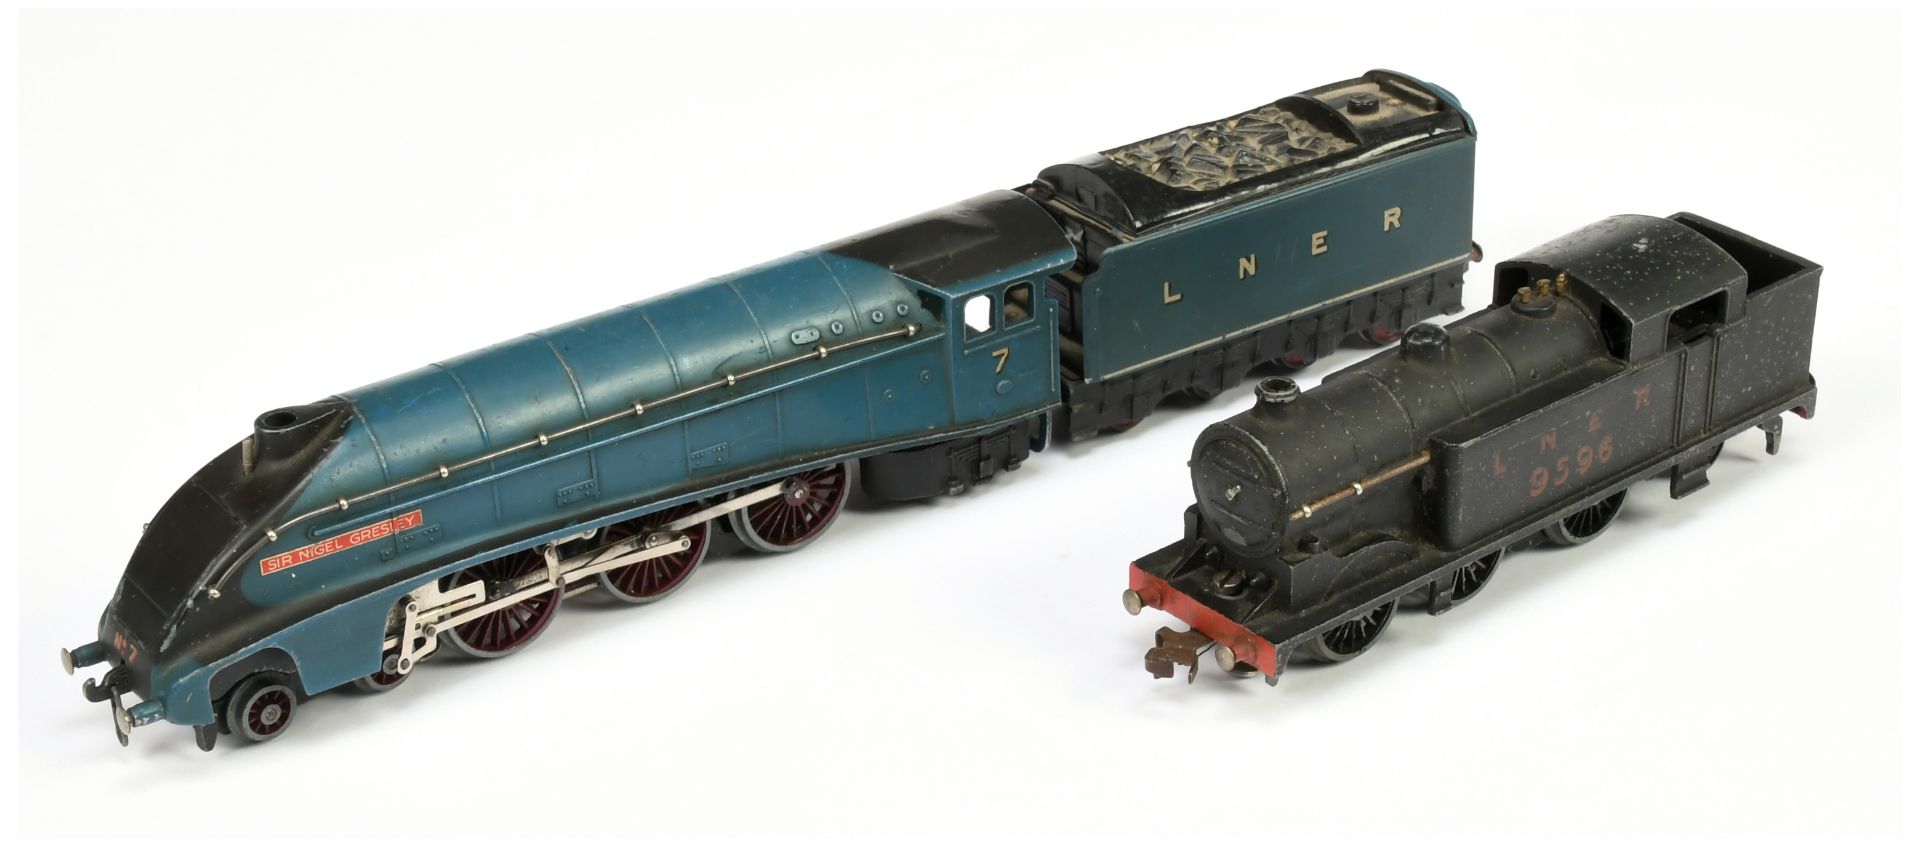 Hornby Dublo Pair of LNER Steam Locomotives comprising of 